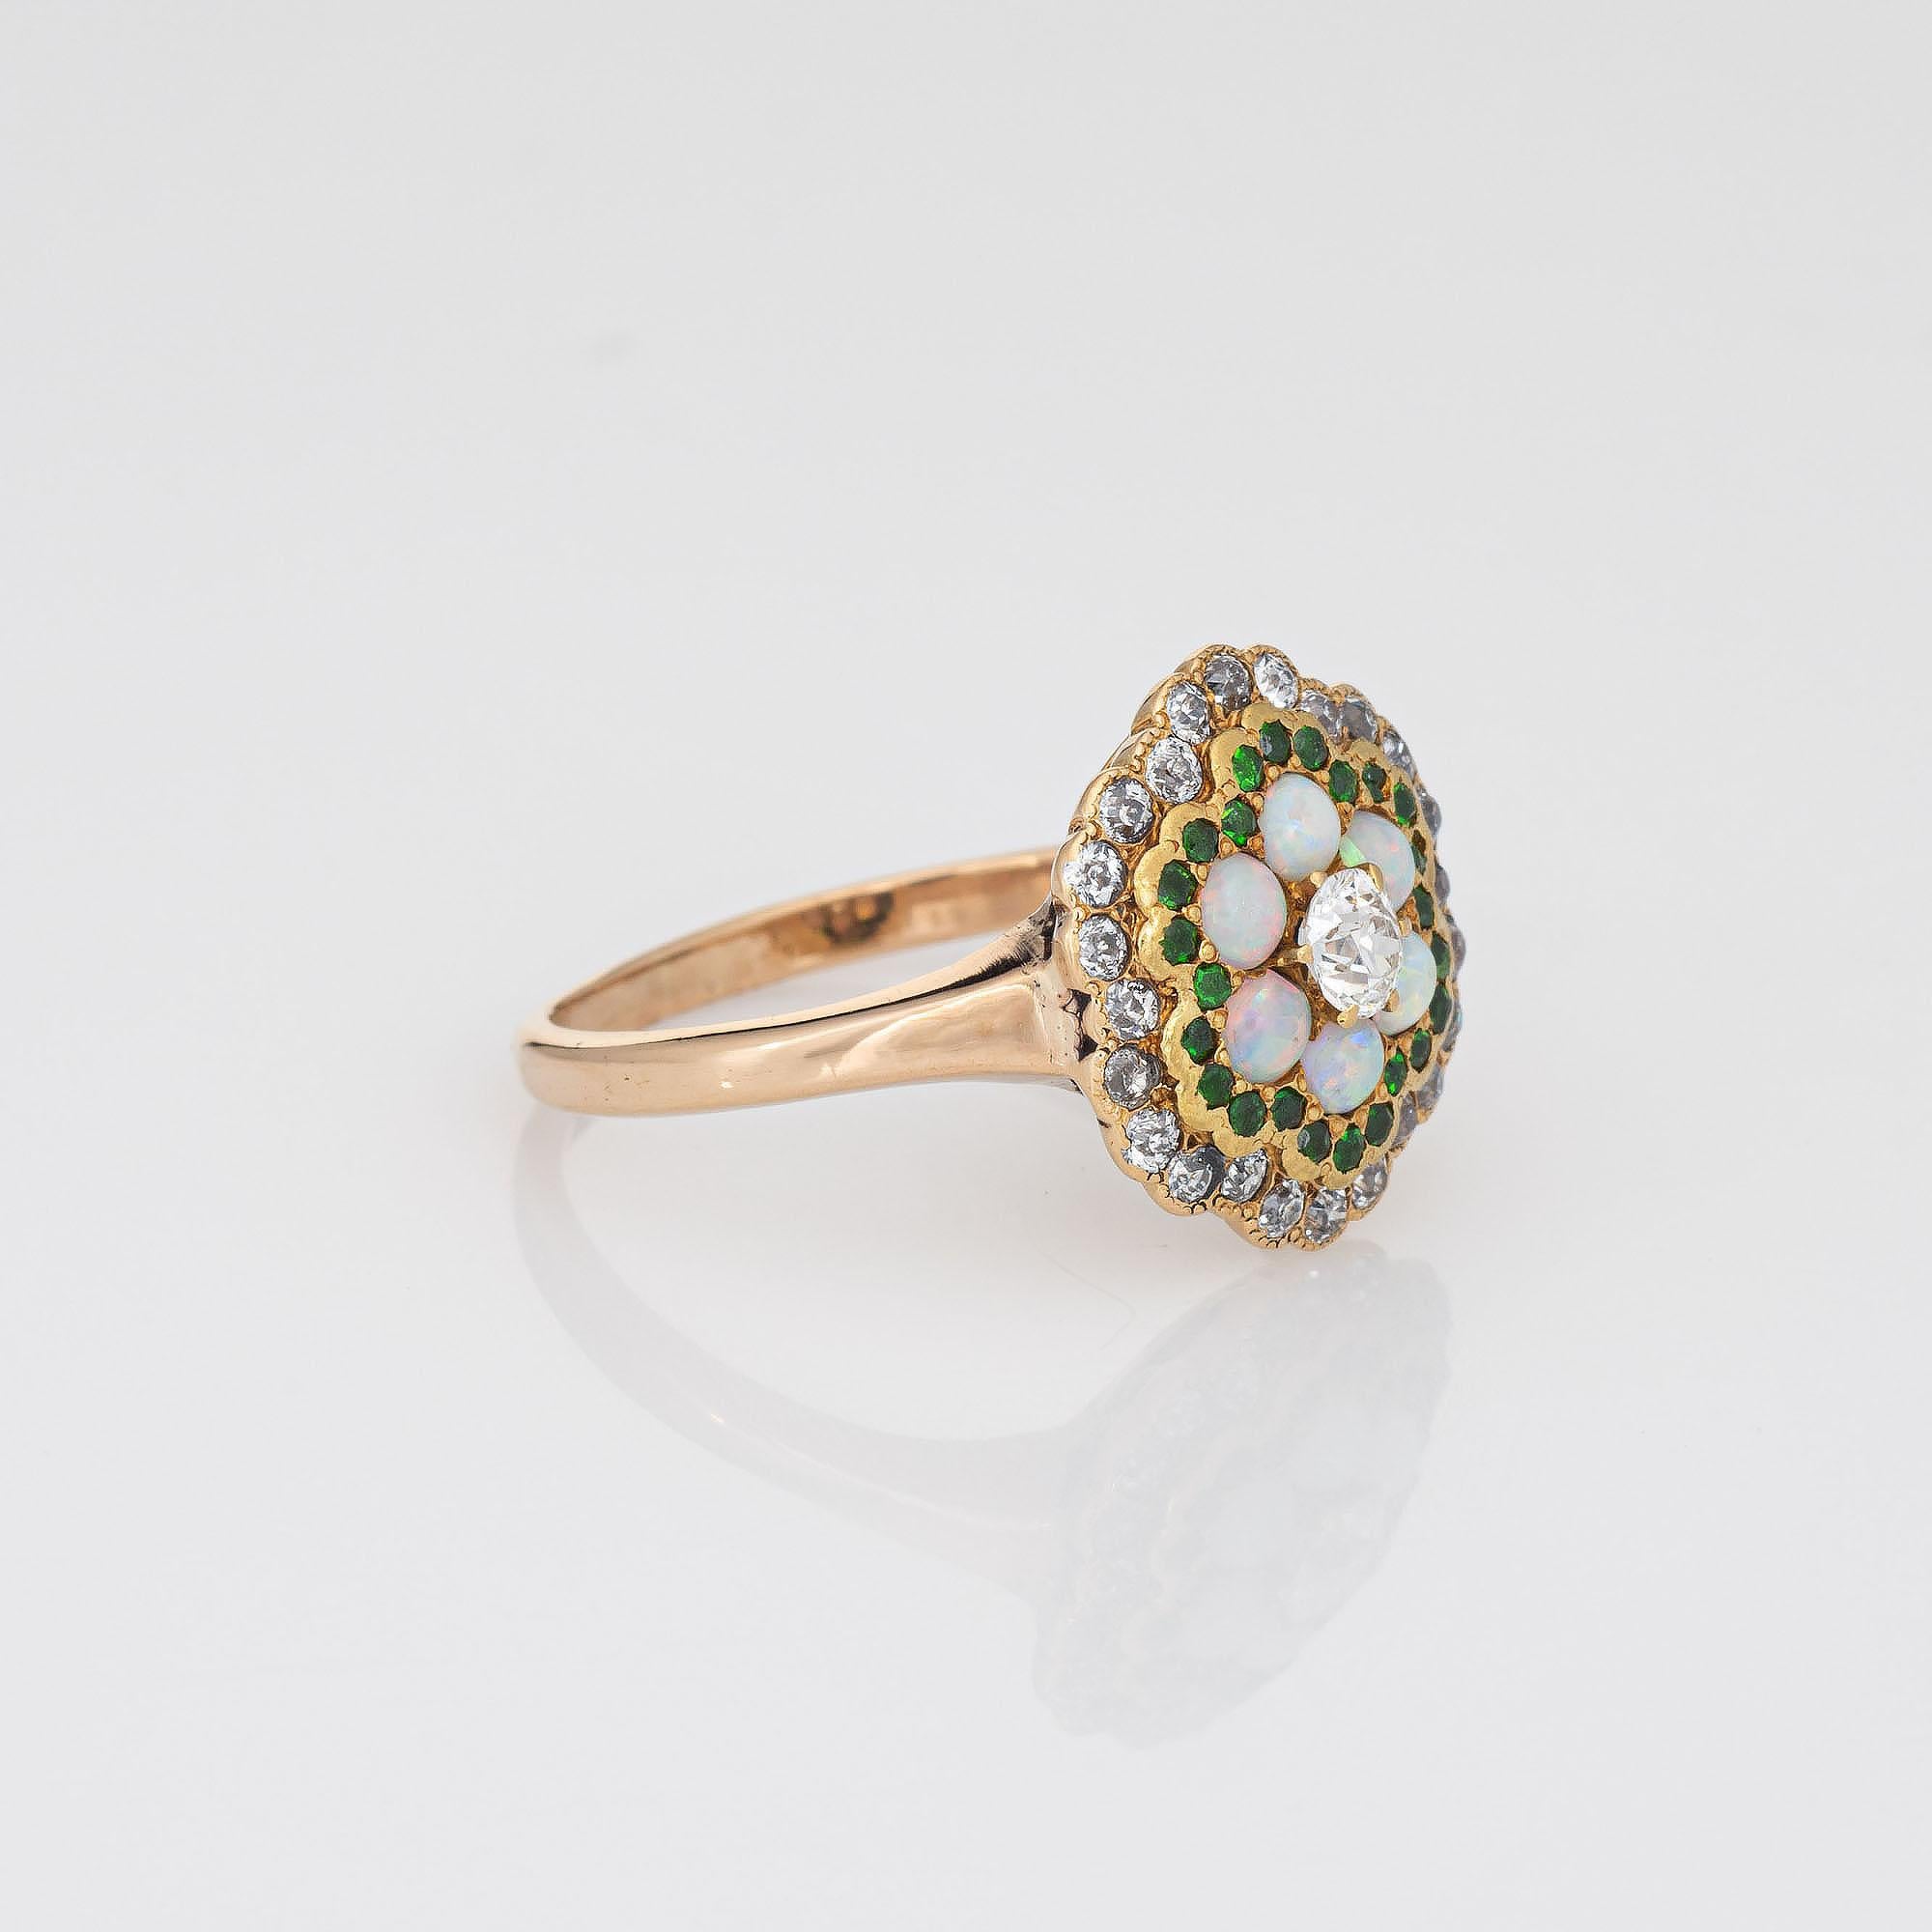 Old Mine Cut Antique Edwardian Opal Diamond Ring Demantoid Garnet 18k Yellow Gold Jewelry